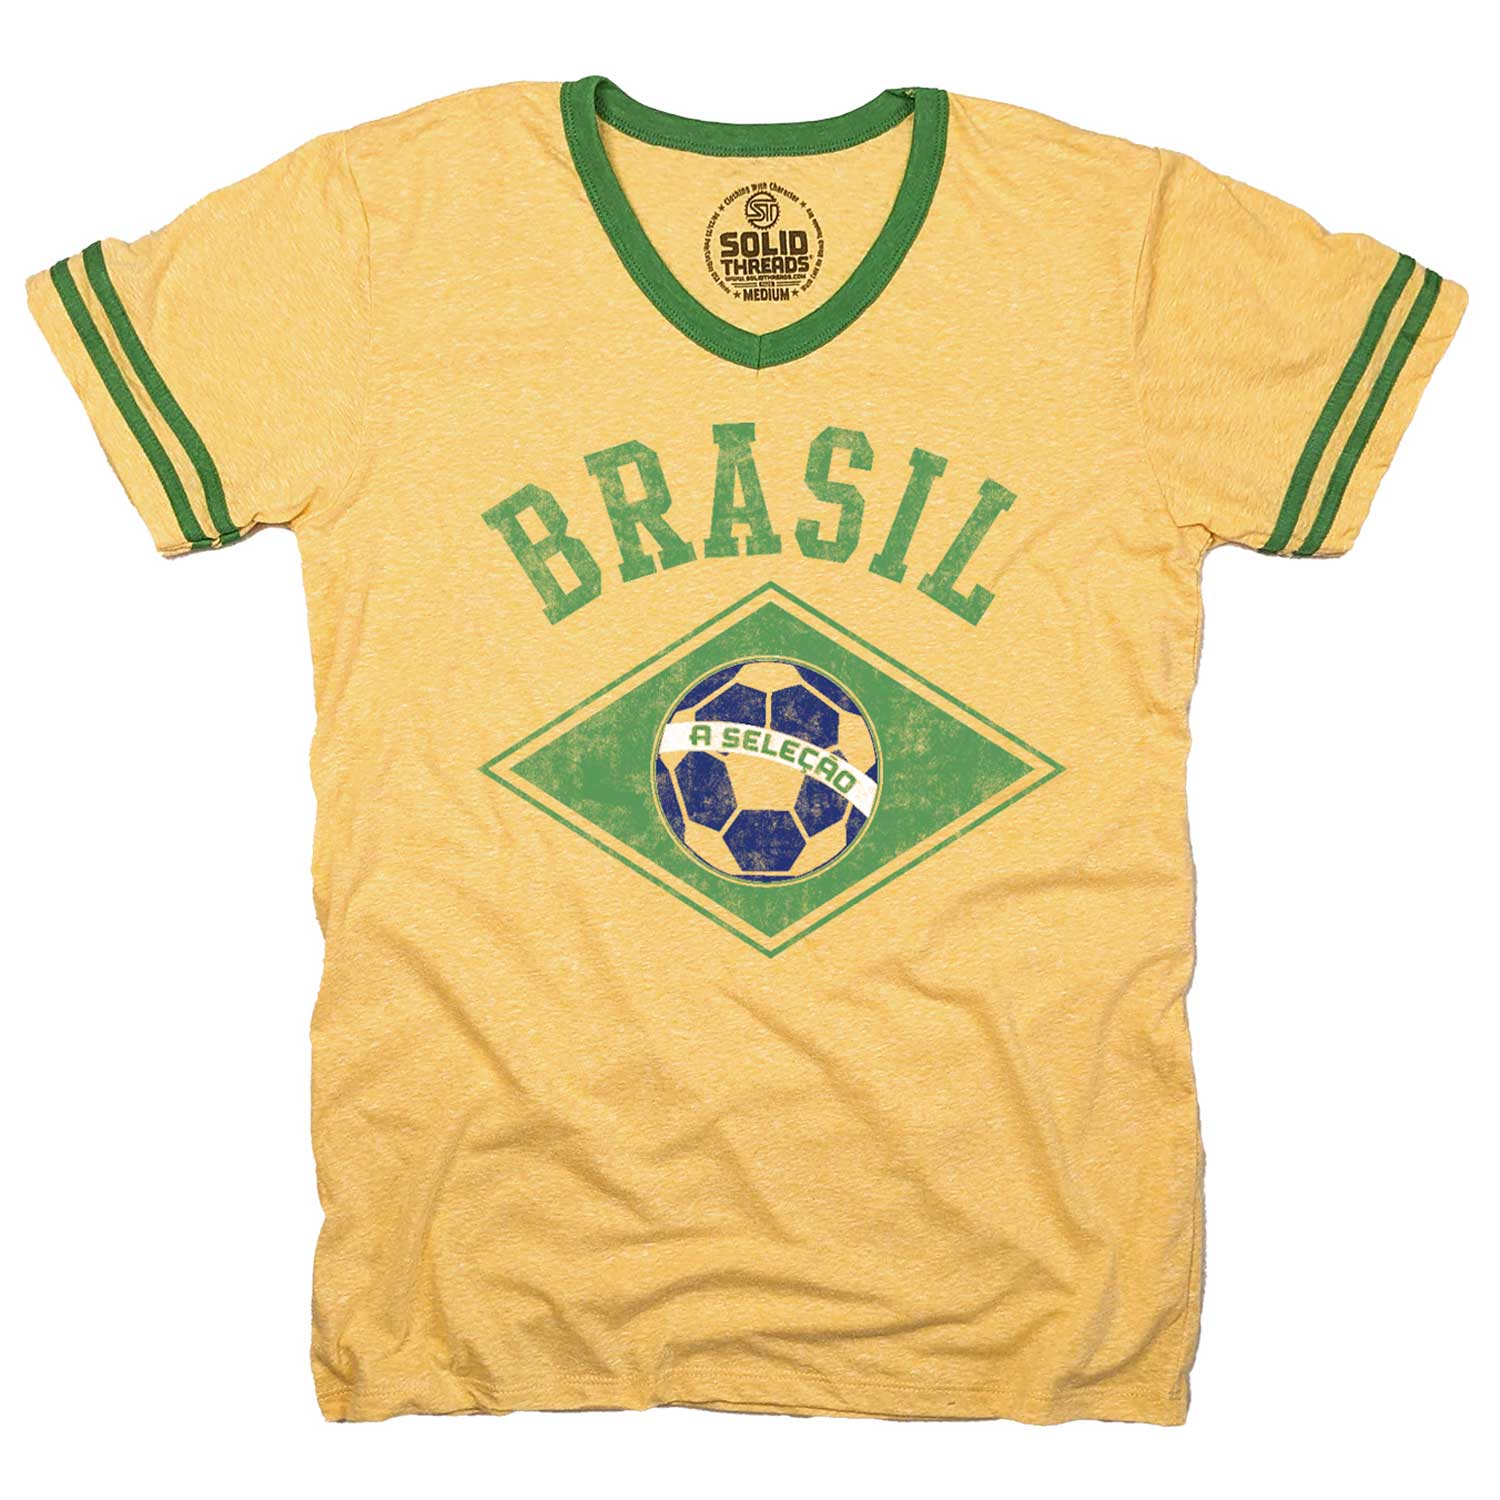 at styre Sprog Lee Brazil National Soccer Team T-shirt - Solid Threads